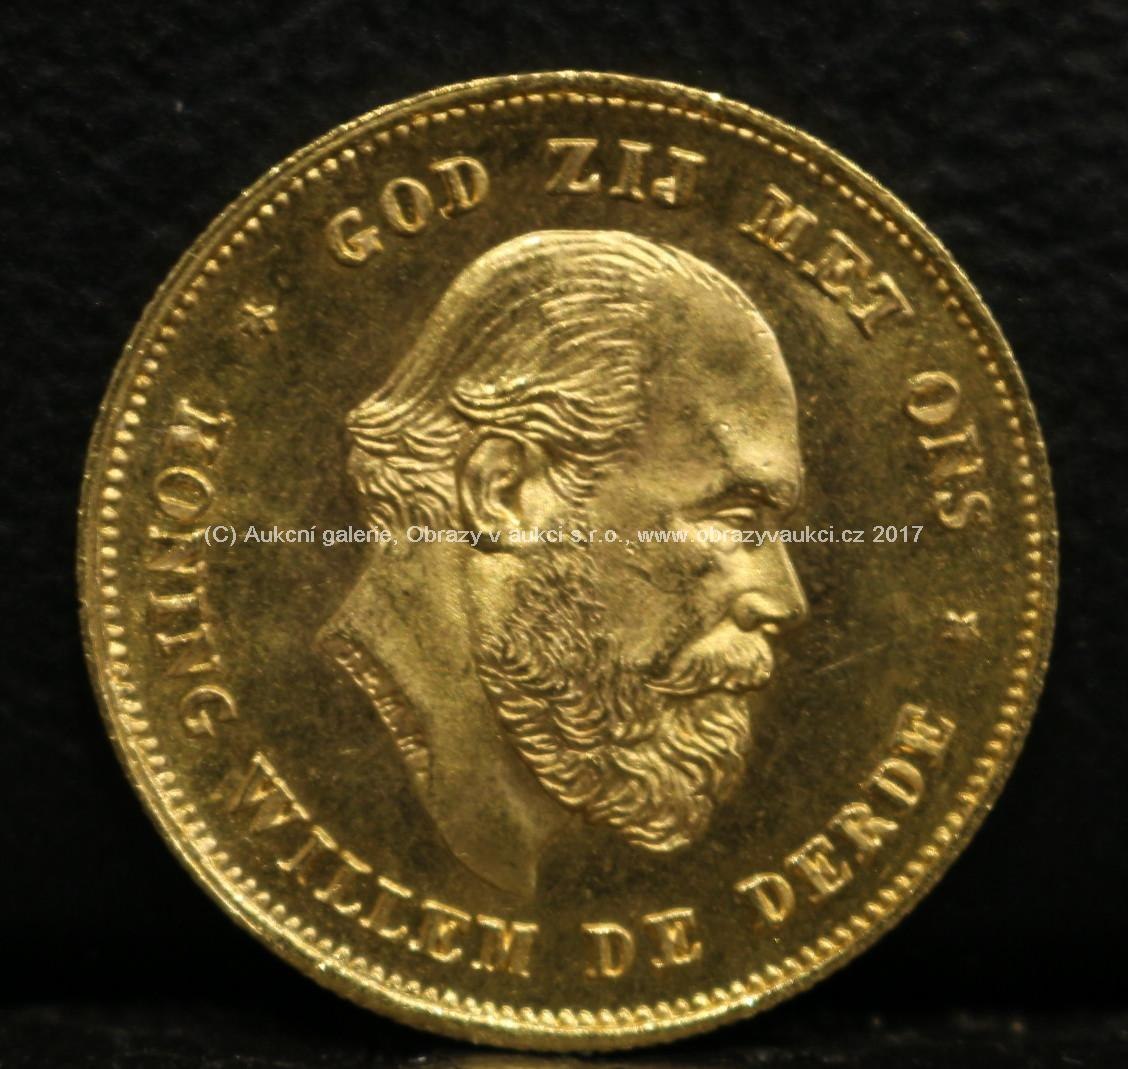 Zlatá mince - 10 Gulden, Koning Wille de Derde, 1875, Nizozemí, ryzost 900/1000, hmotnost 6,72 g